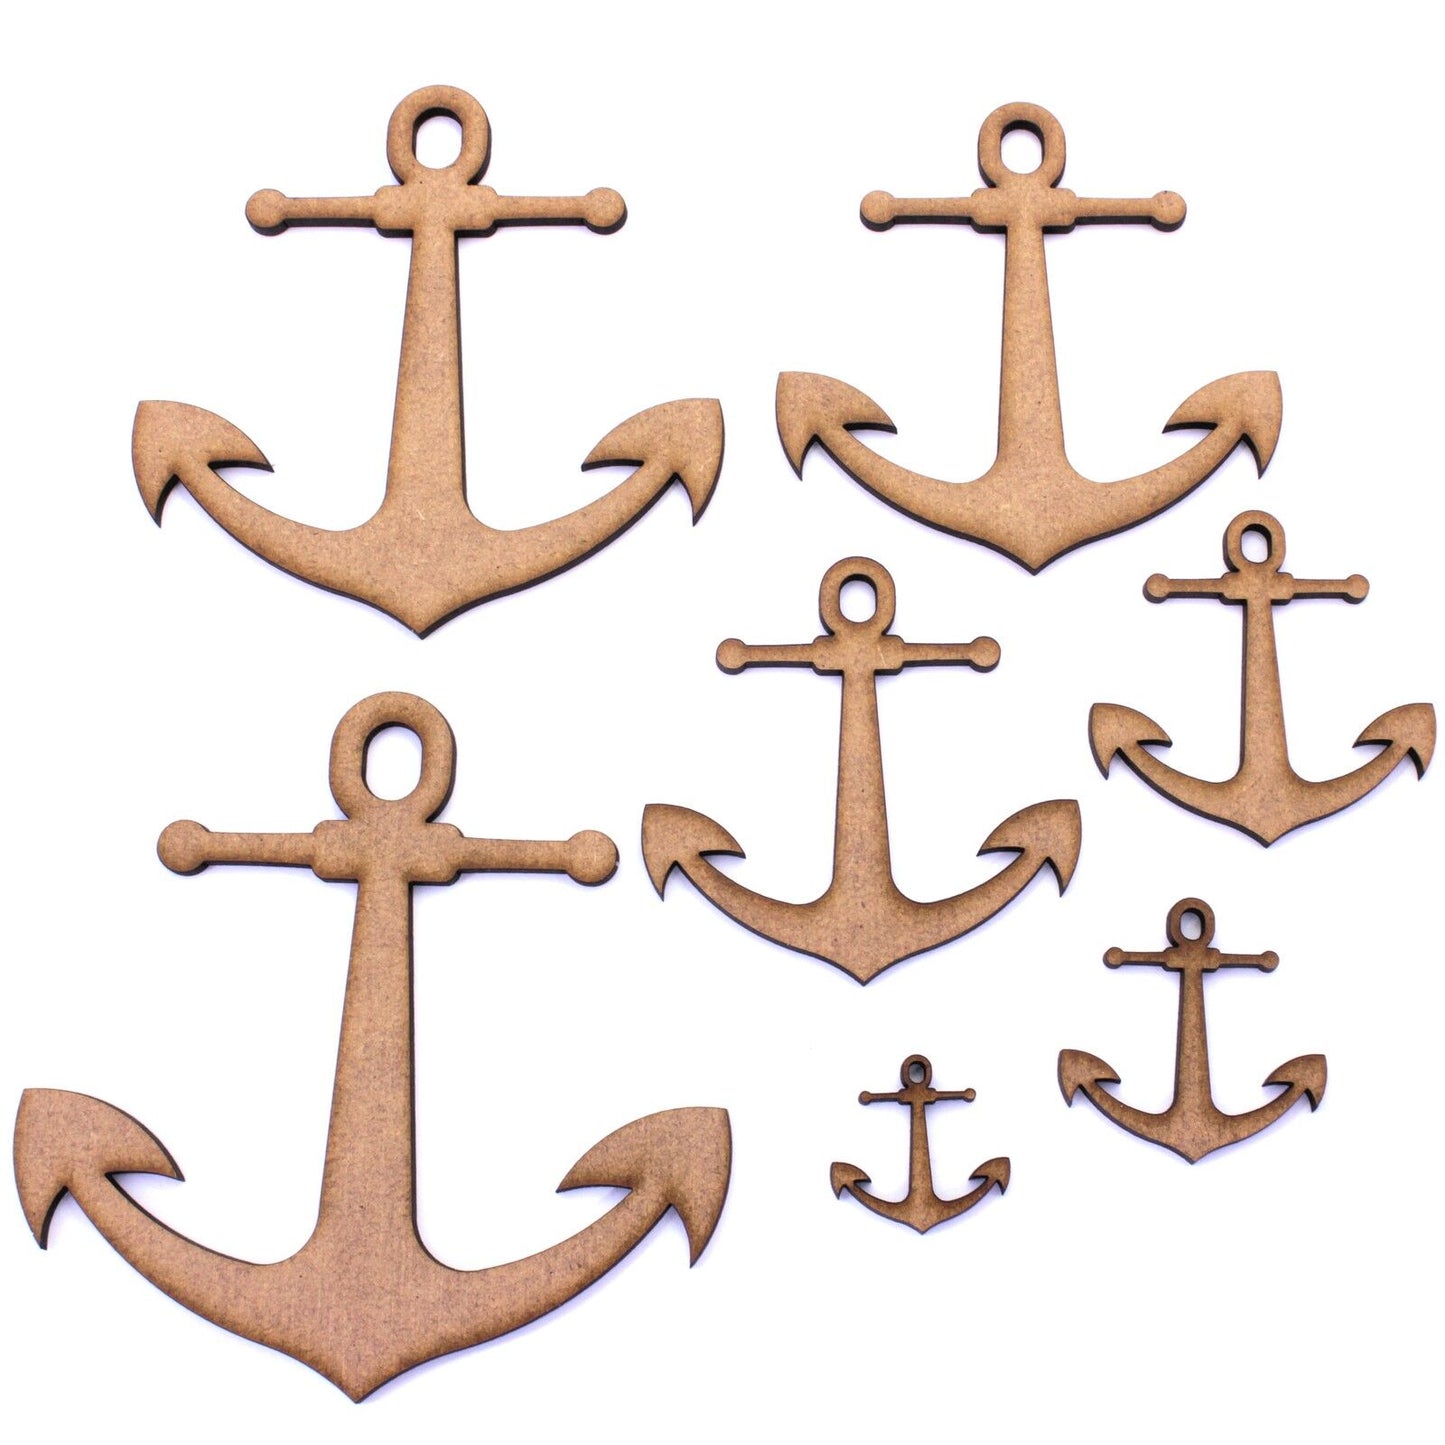 Boat/Ship Anchor Craft Shape, Tags, Decorations. 2mm MDF Wood. Nautical, Marine